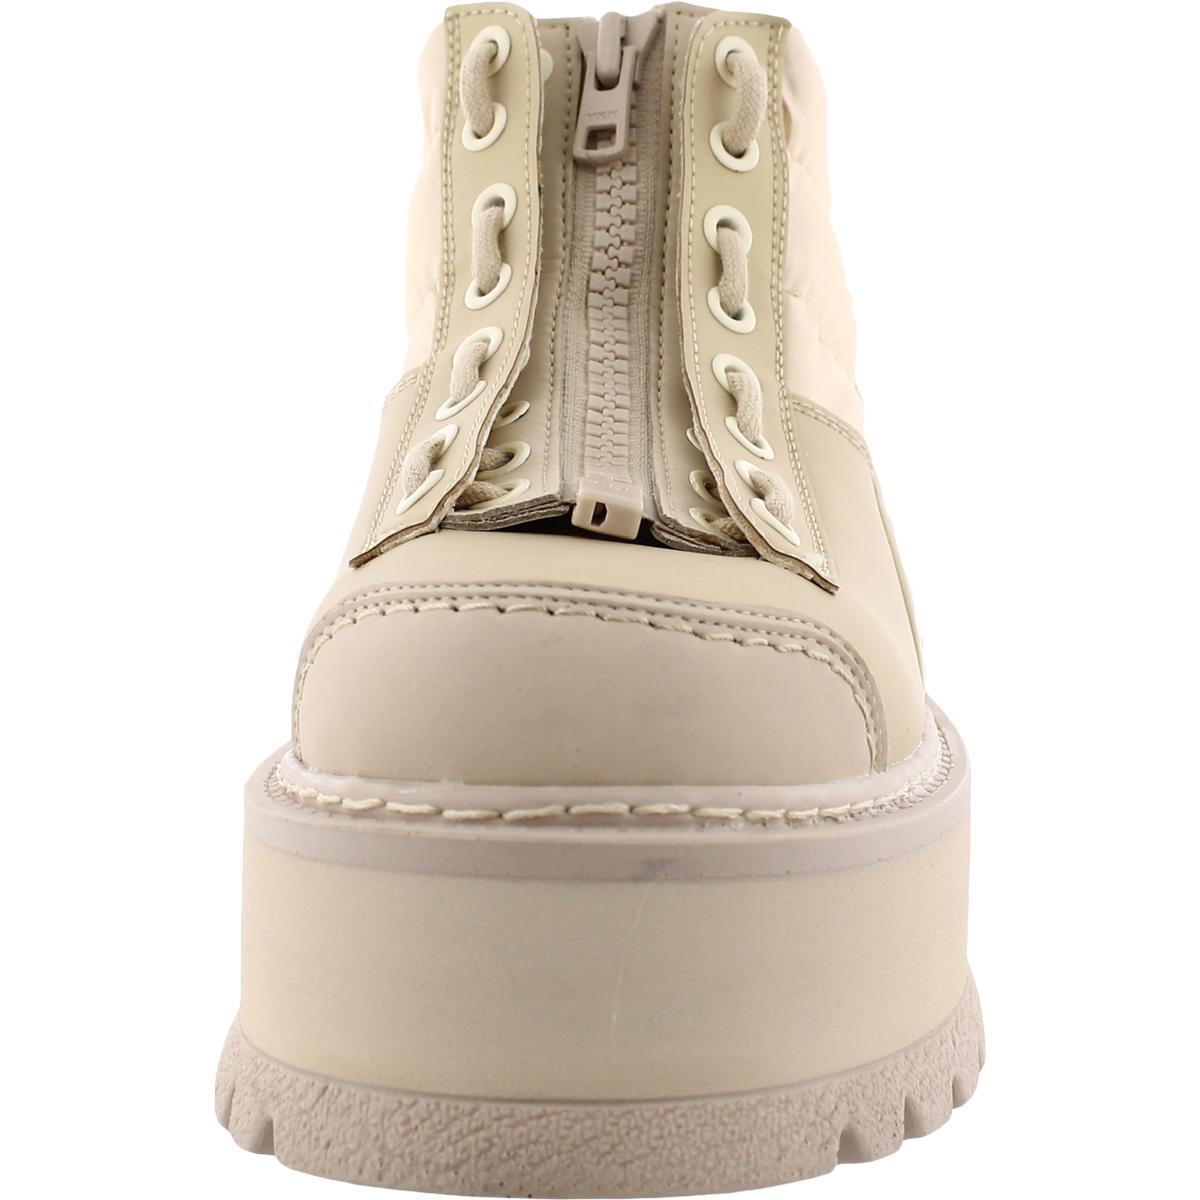 Puma shoes Sneaker Boot Zip - Semolina-Smoke-Smoke 1